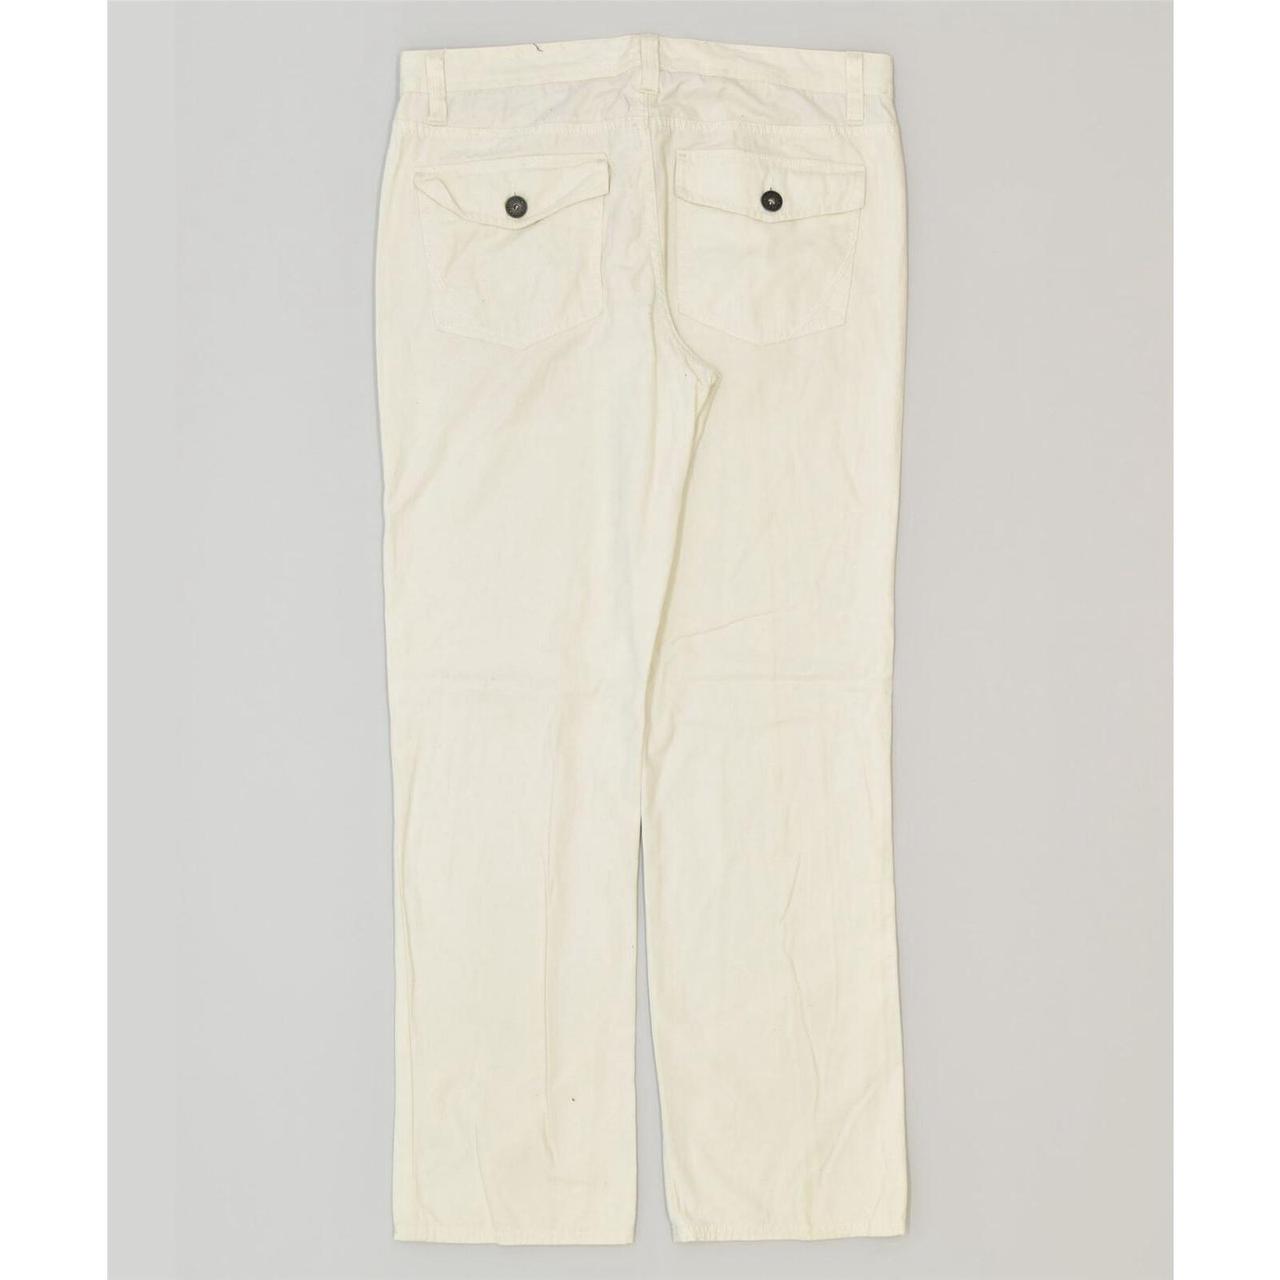 Converse Men's White Trousers (2)